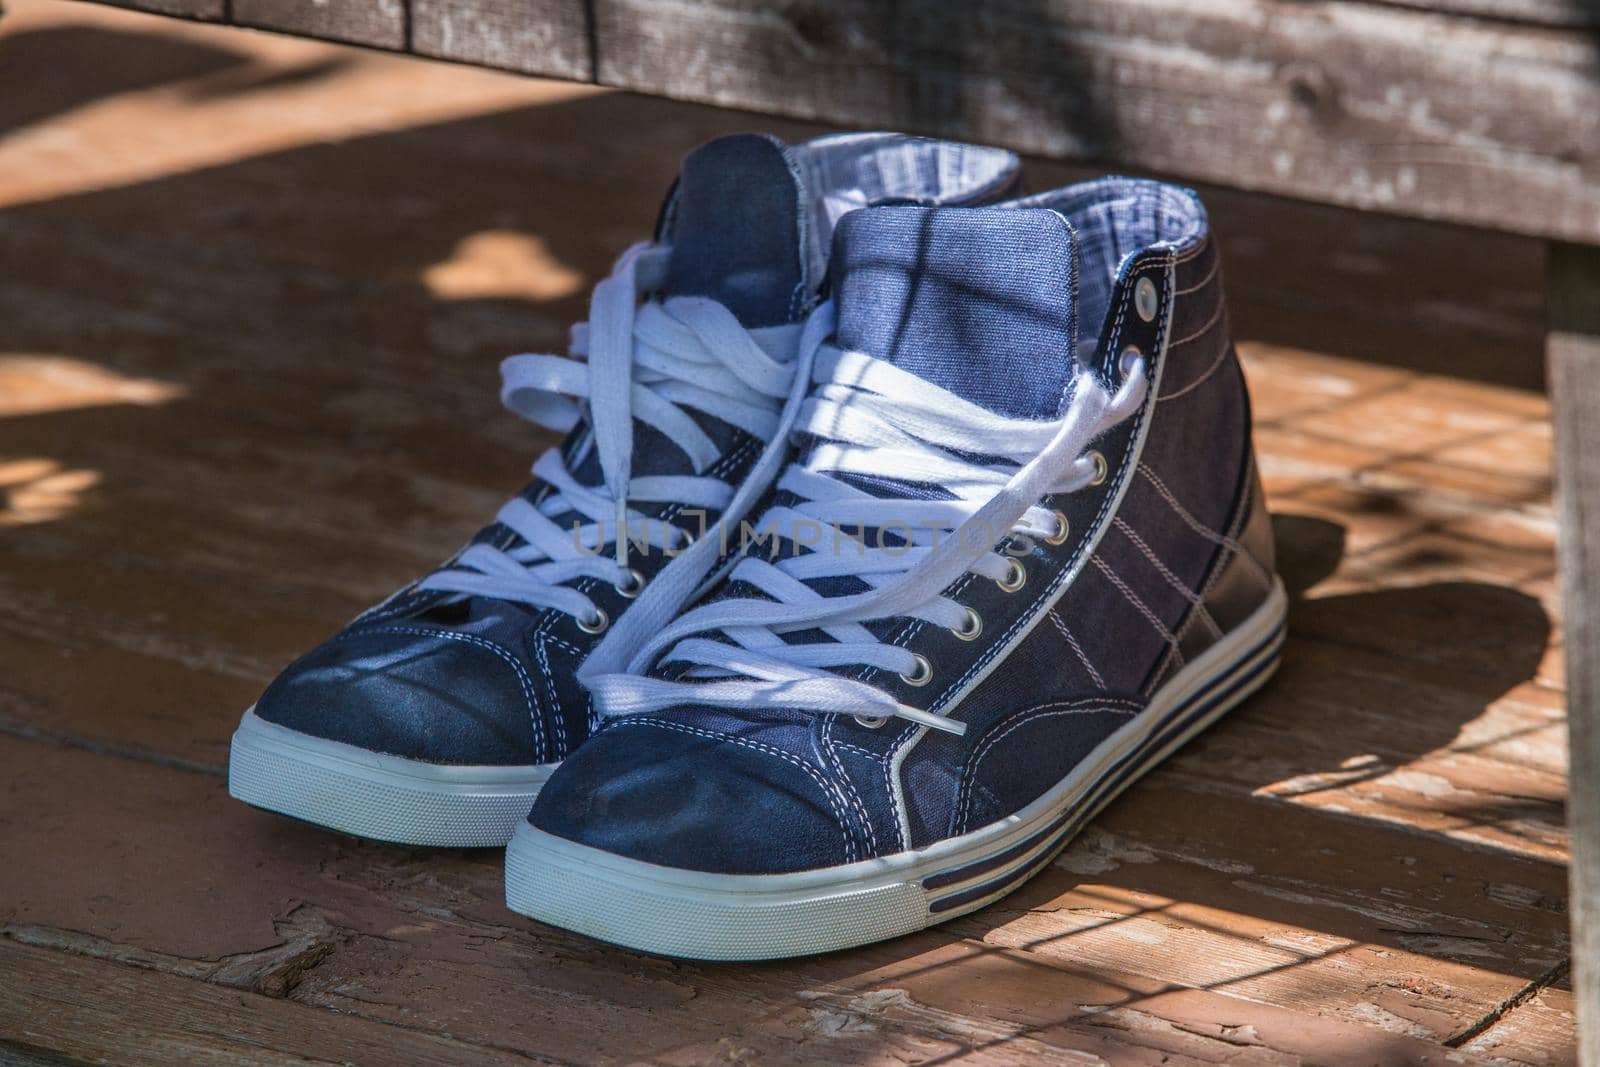 Men's blue denim sneakers on an old floor  by Yurii